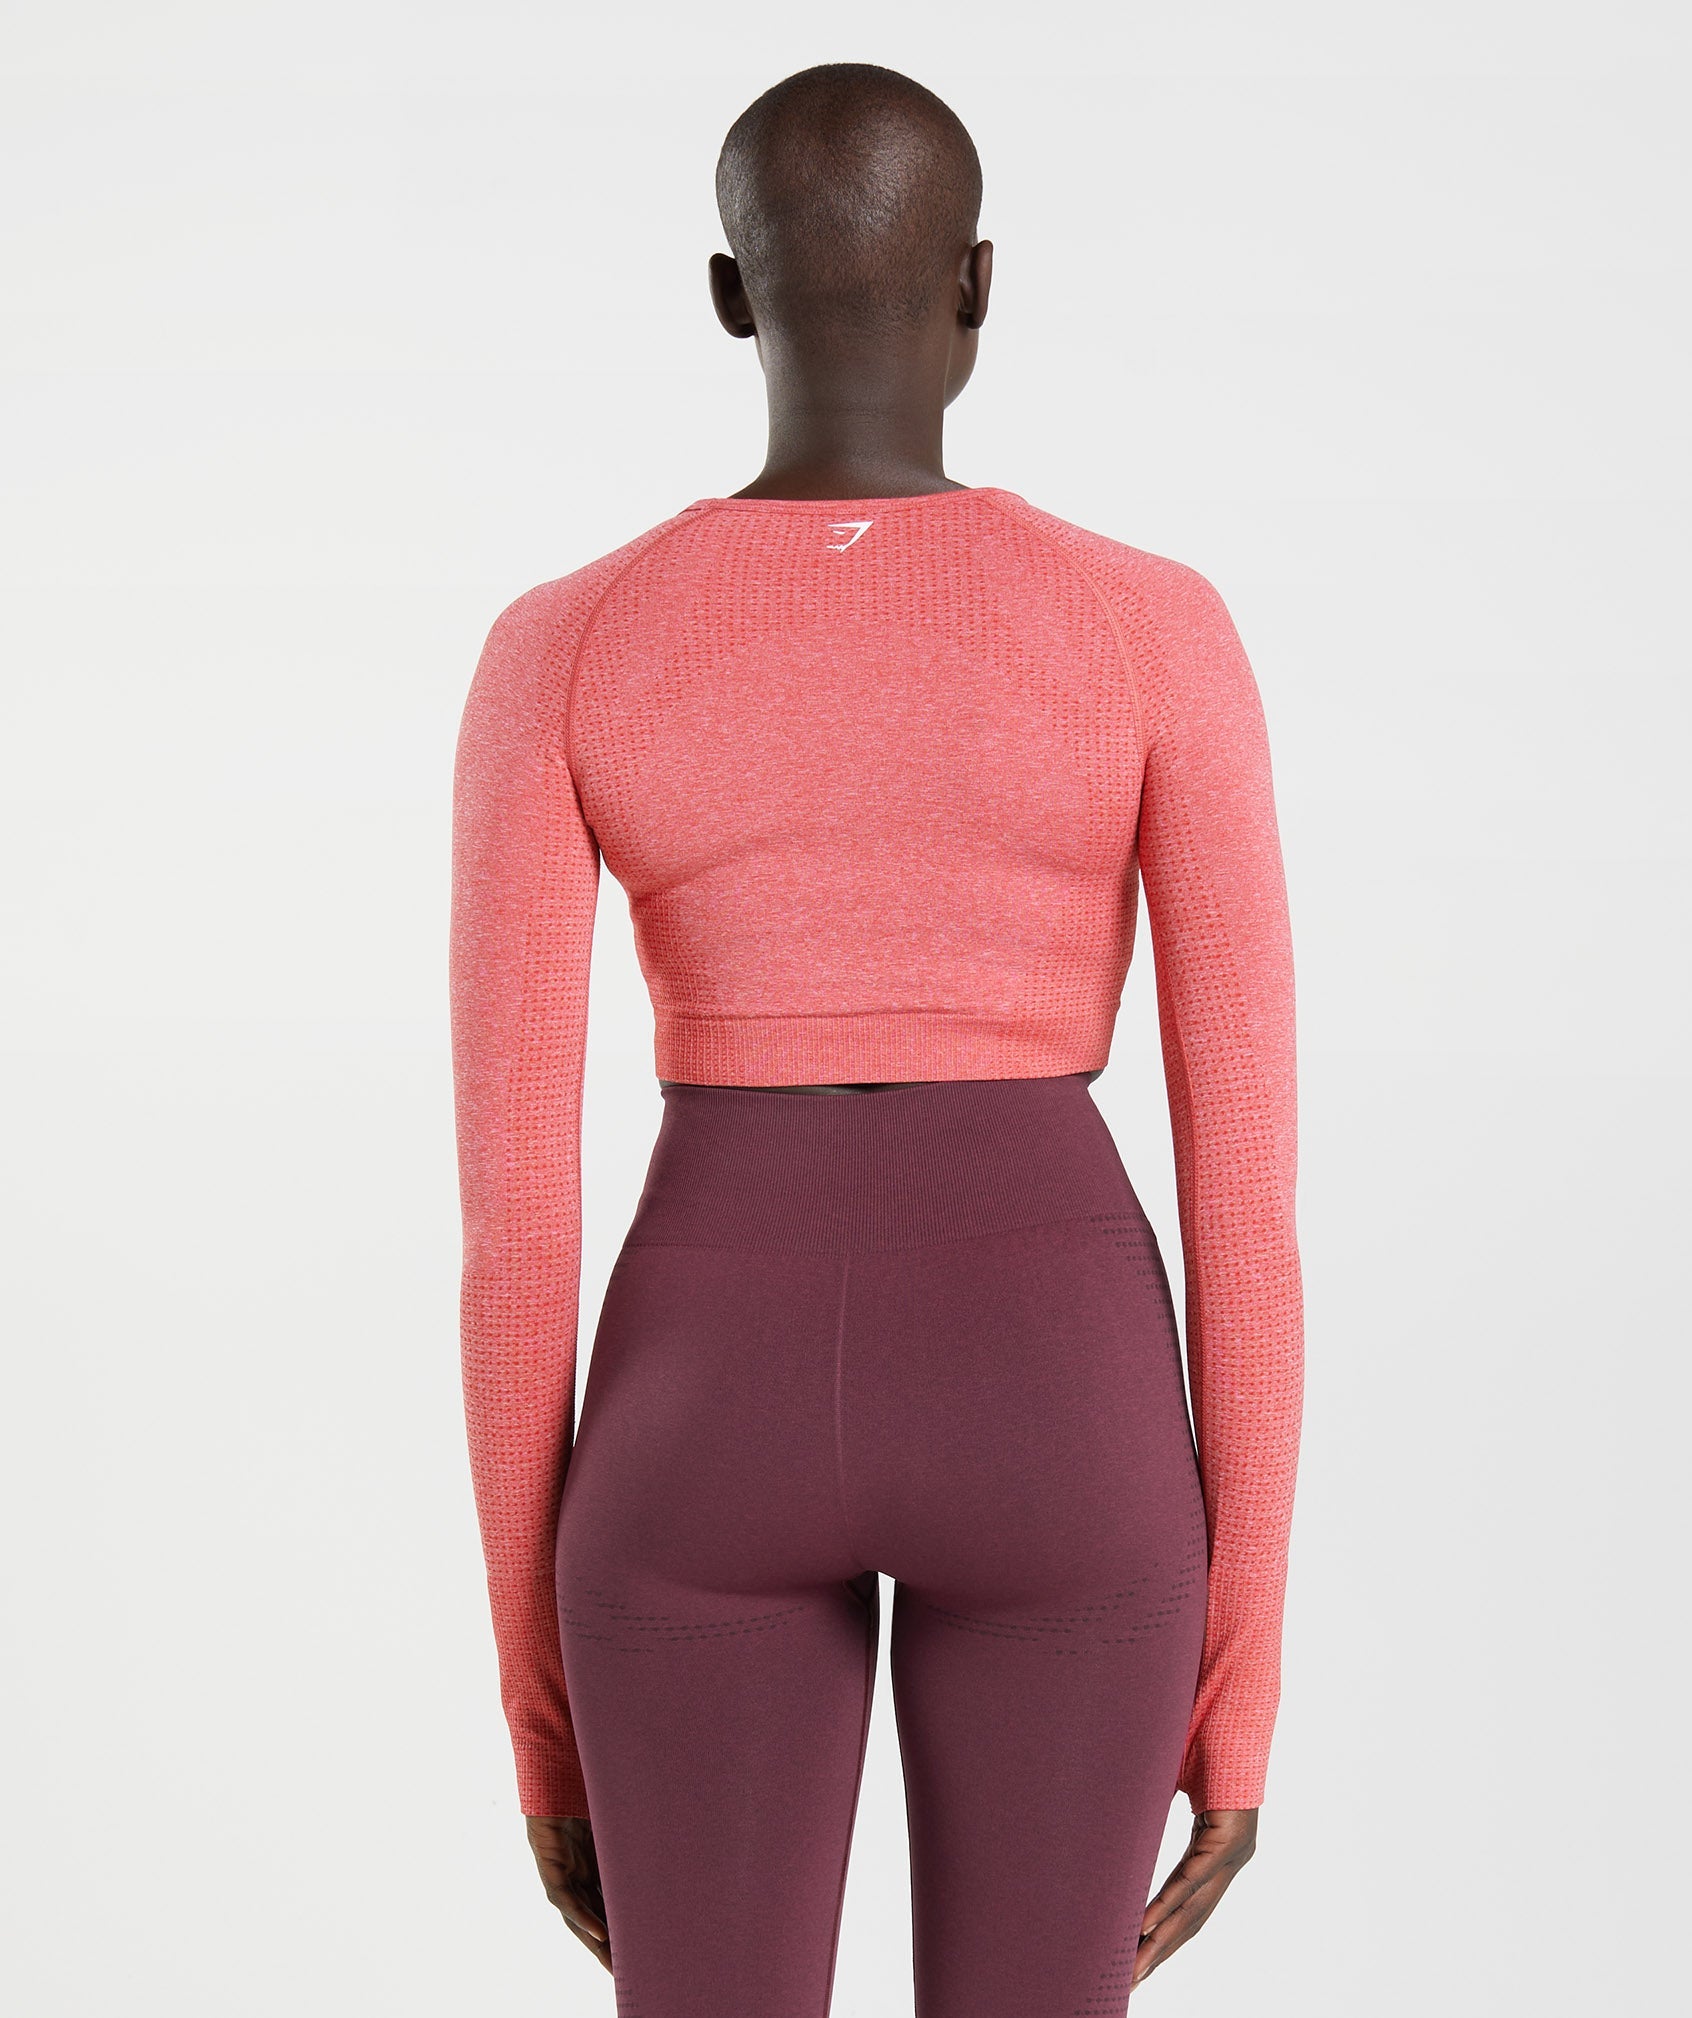 gymshark vital seamless 2.0 shorts - brick red marl (size m), Women's  Fashion, Activewear on Carousell